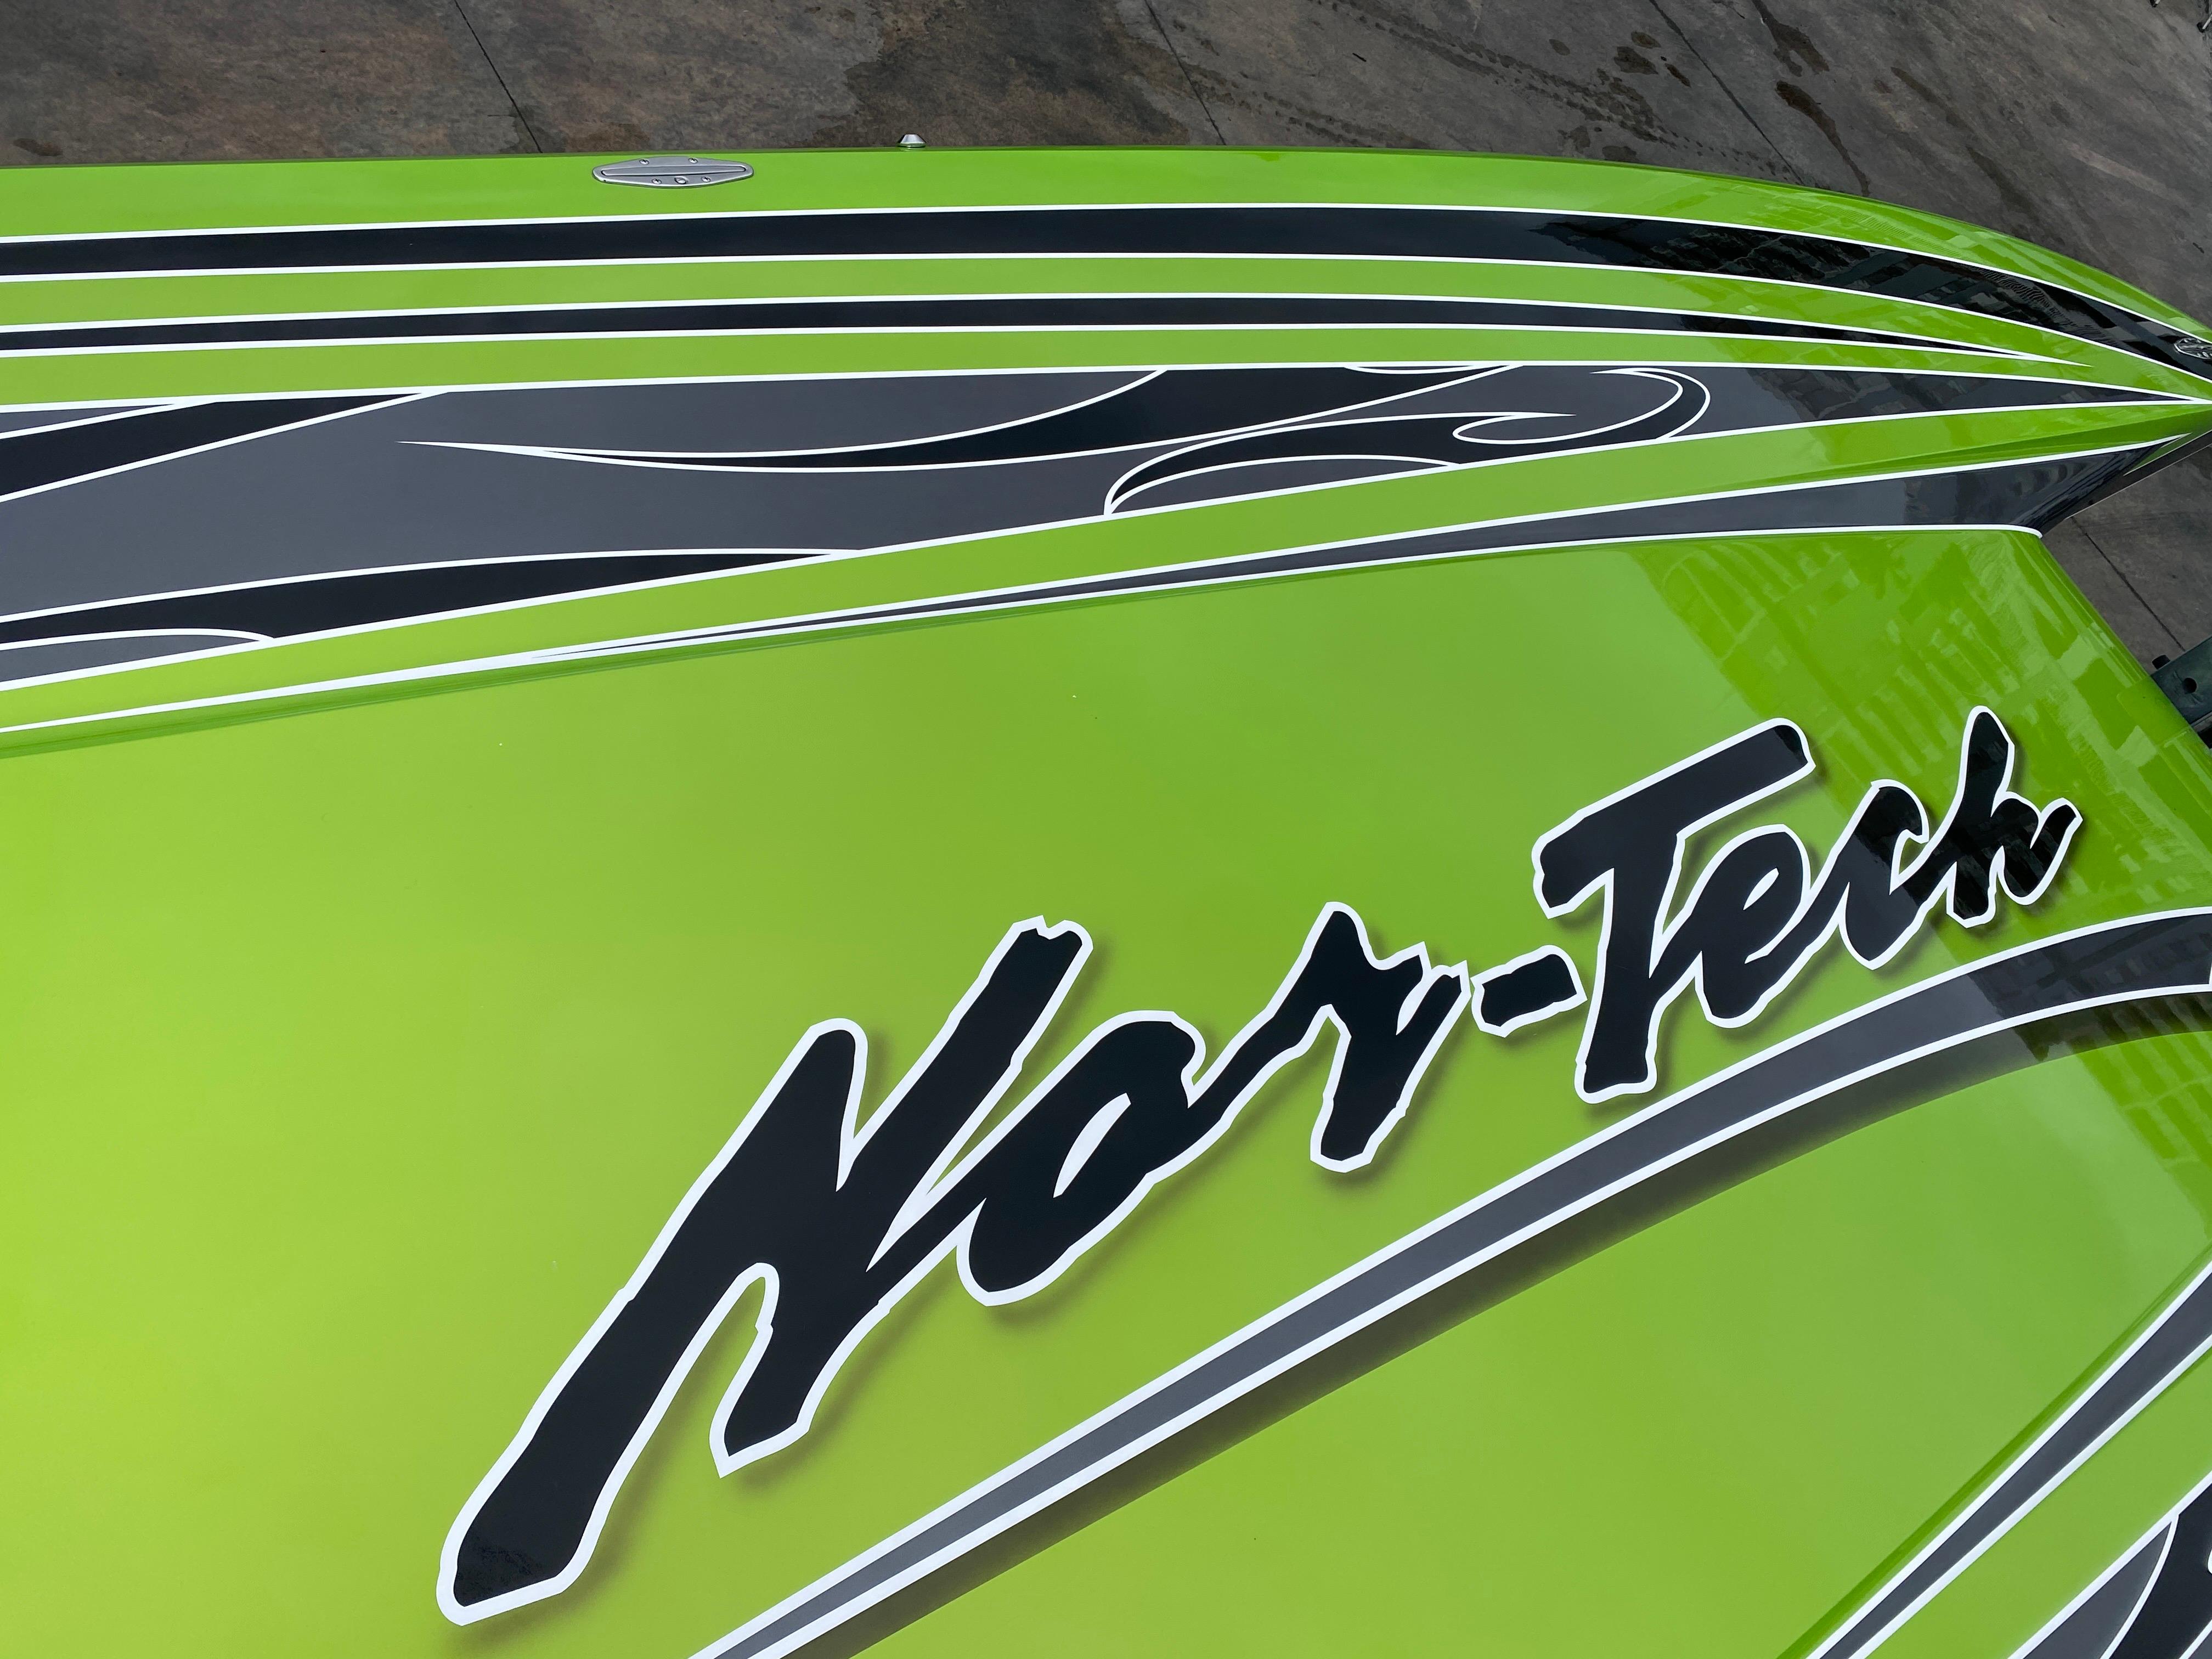 2014 Nor-Tech 4000 Roadster